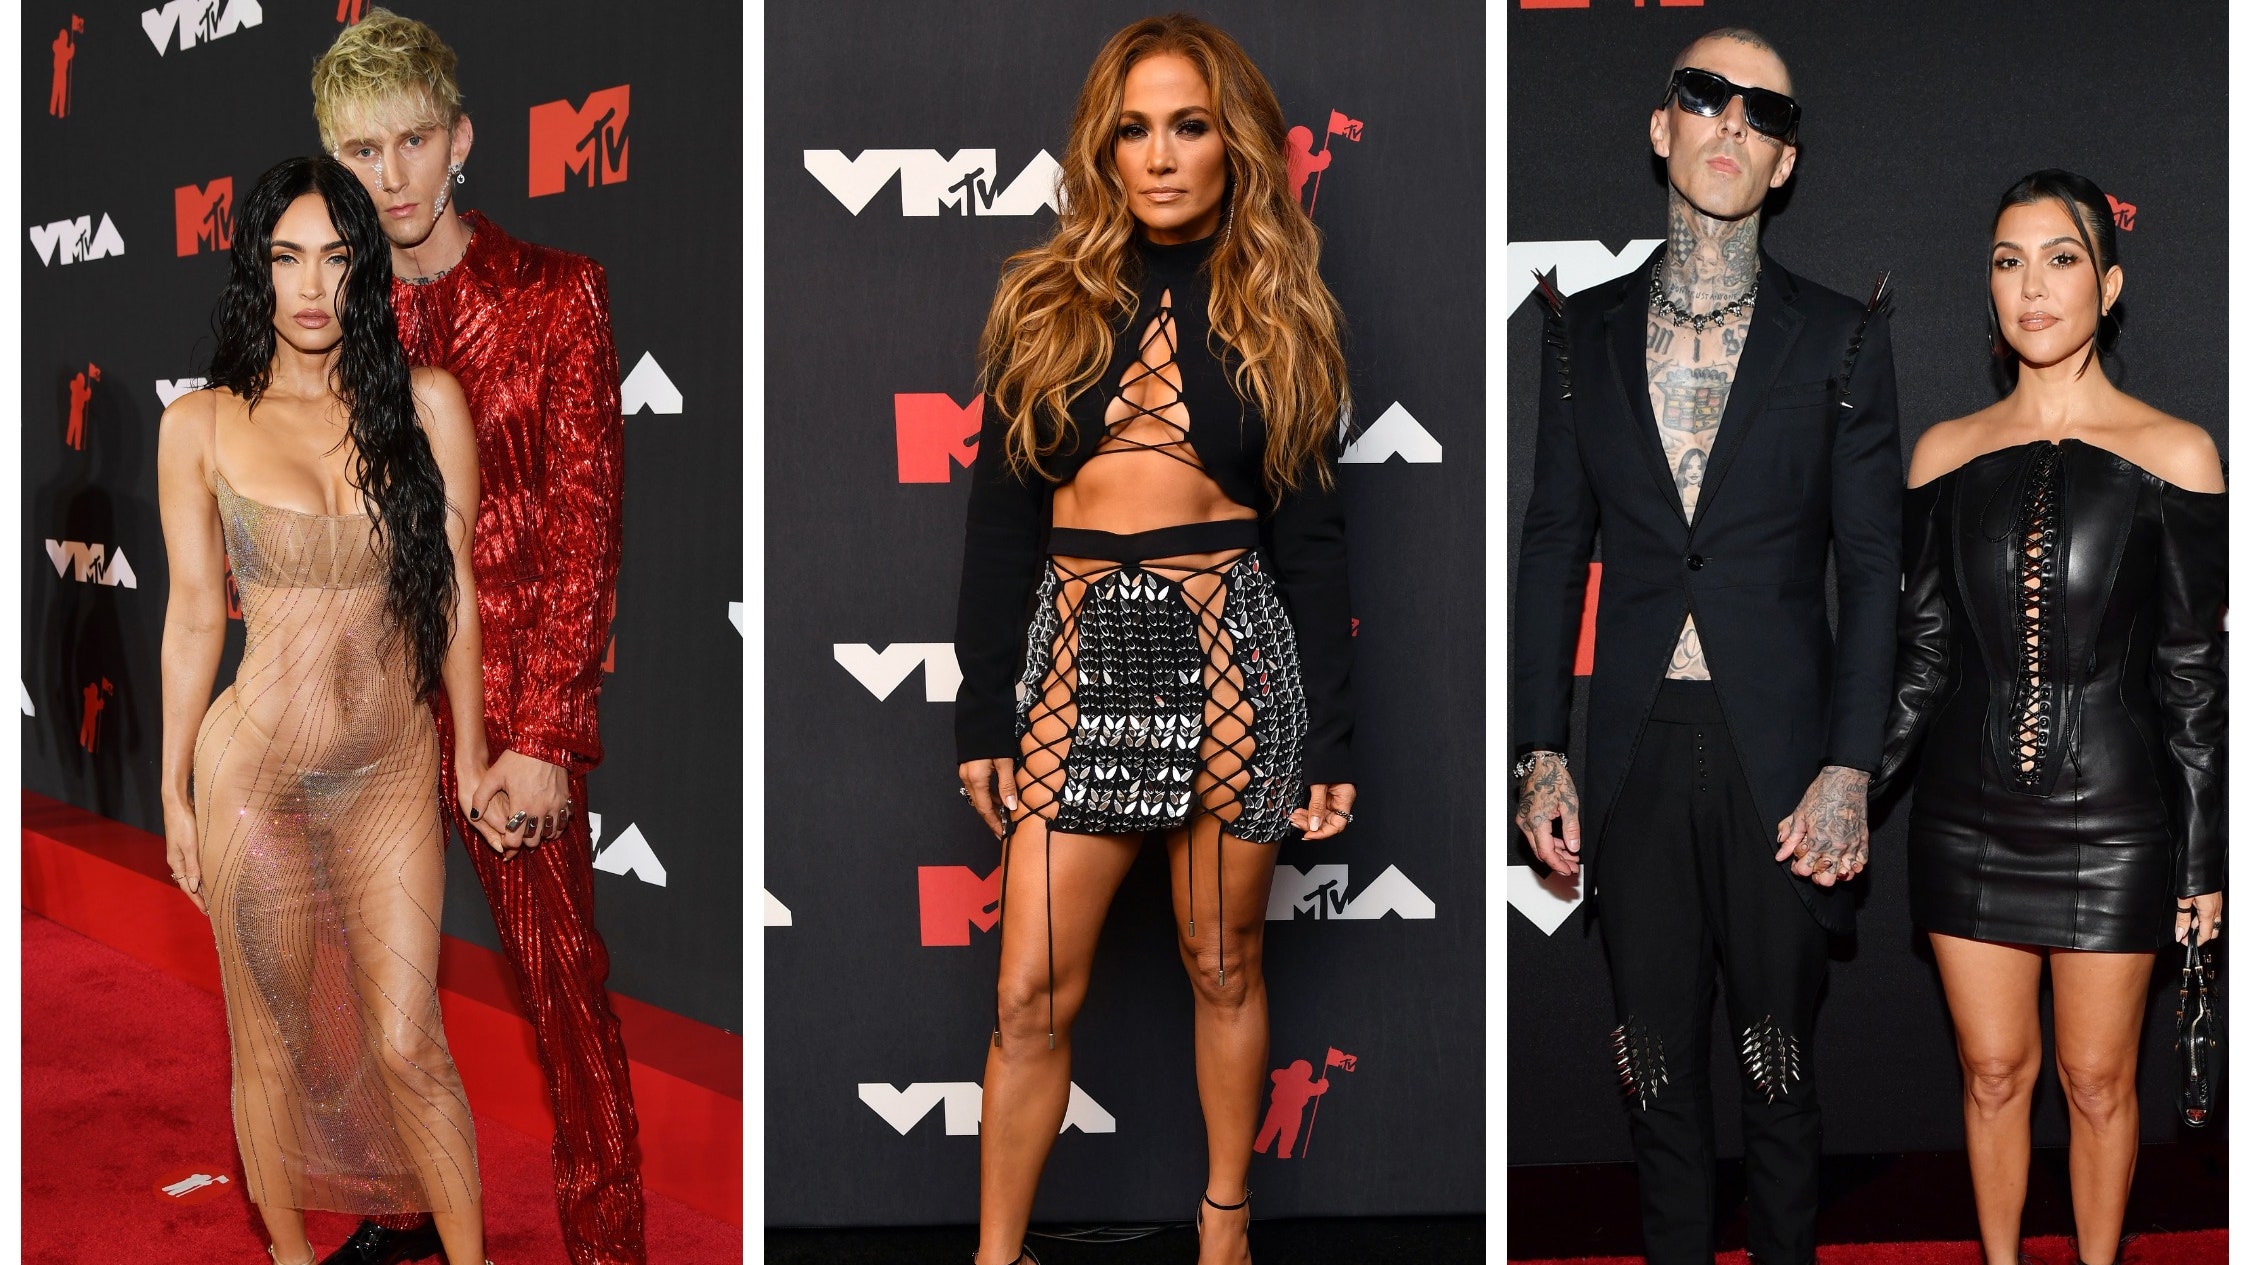 MTV VMA 2021 Меган Фокс и Machine Gun Kelly ДжейЛо и другие гости премии